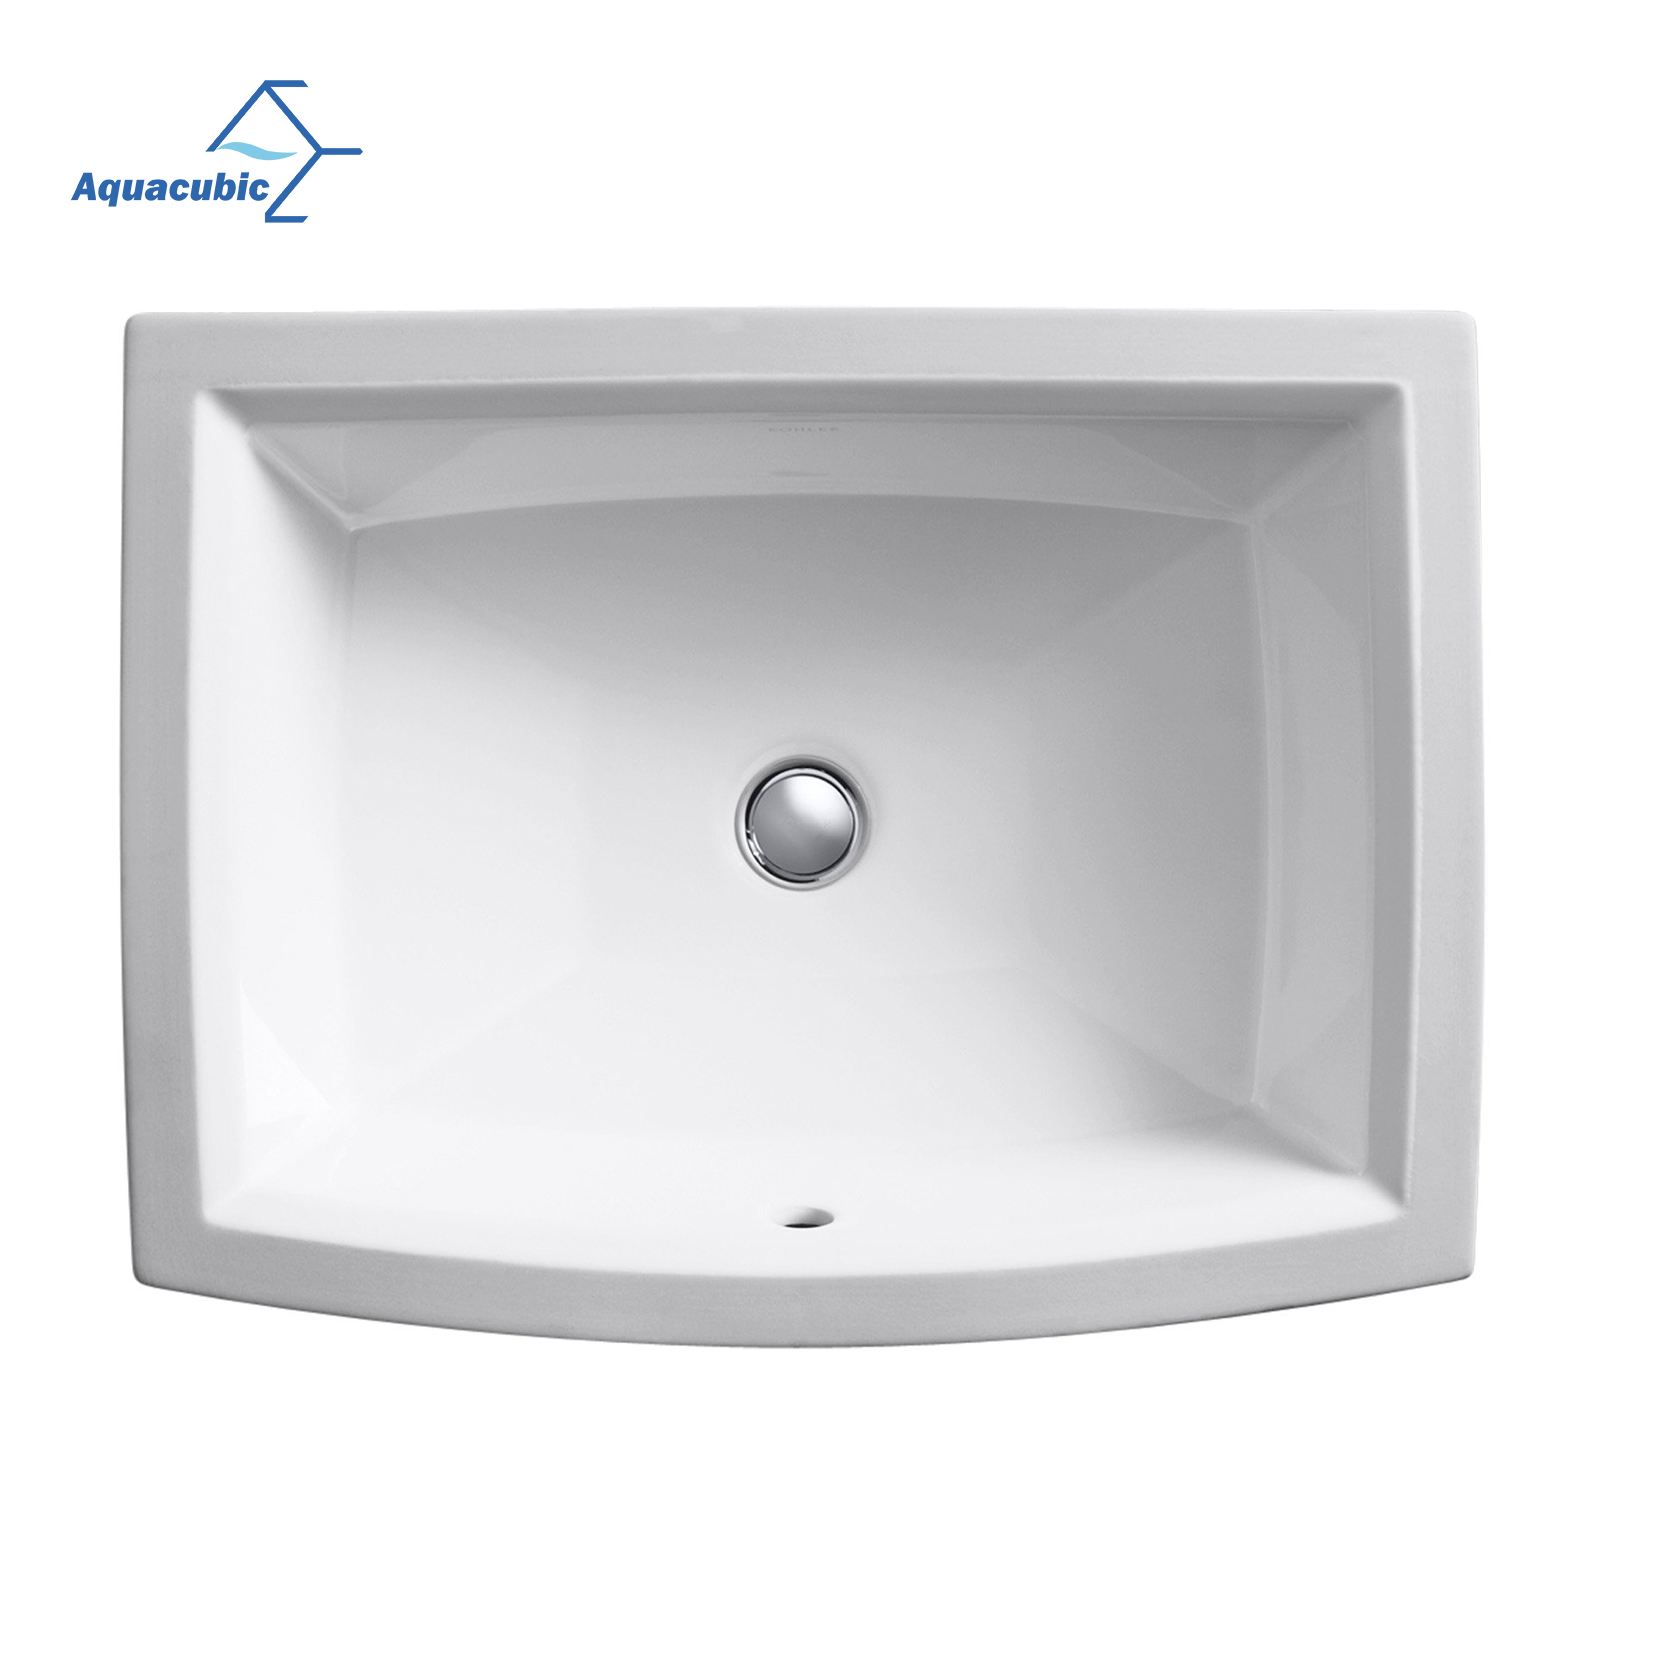 Aquacubic Modern Design Household White Sink Rectangular Bathroom Ceramic Hand Washing Undermount Sinks 